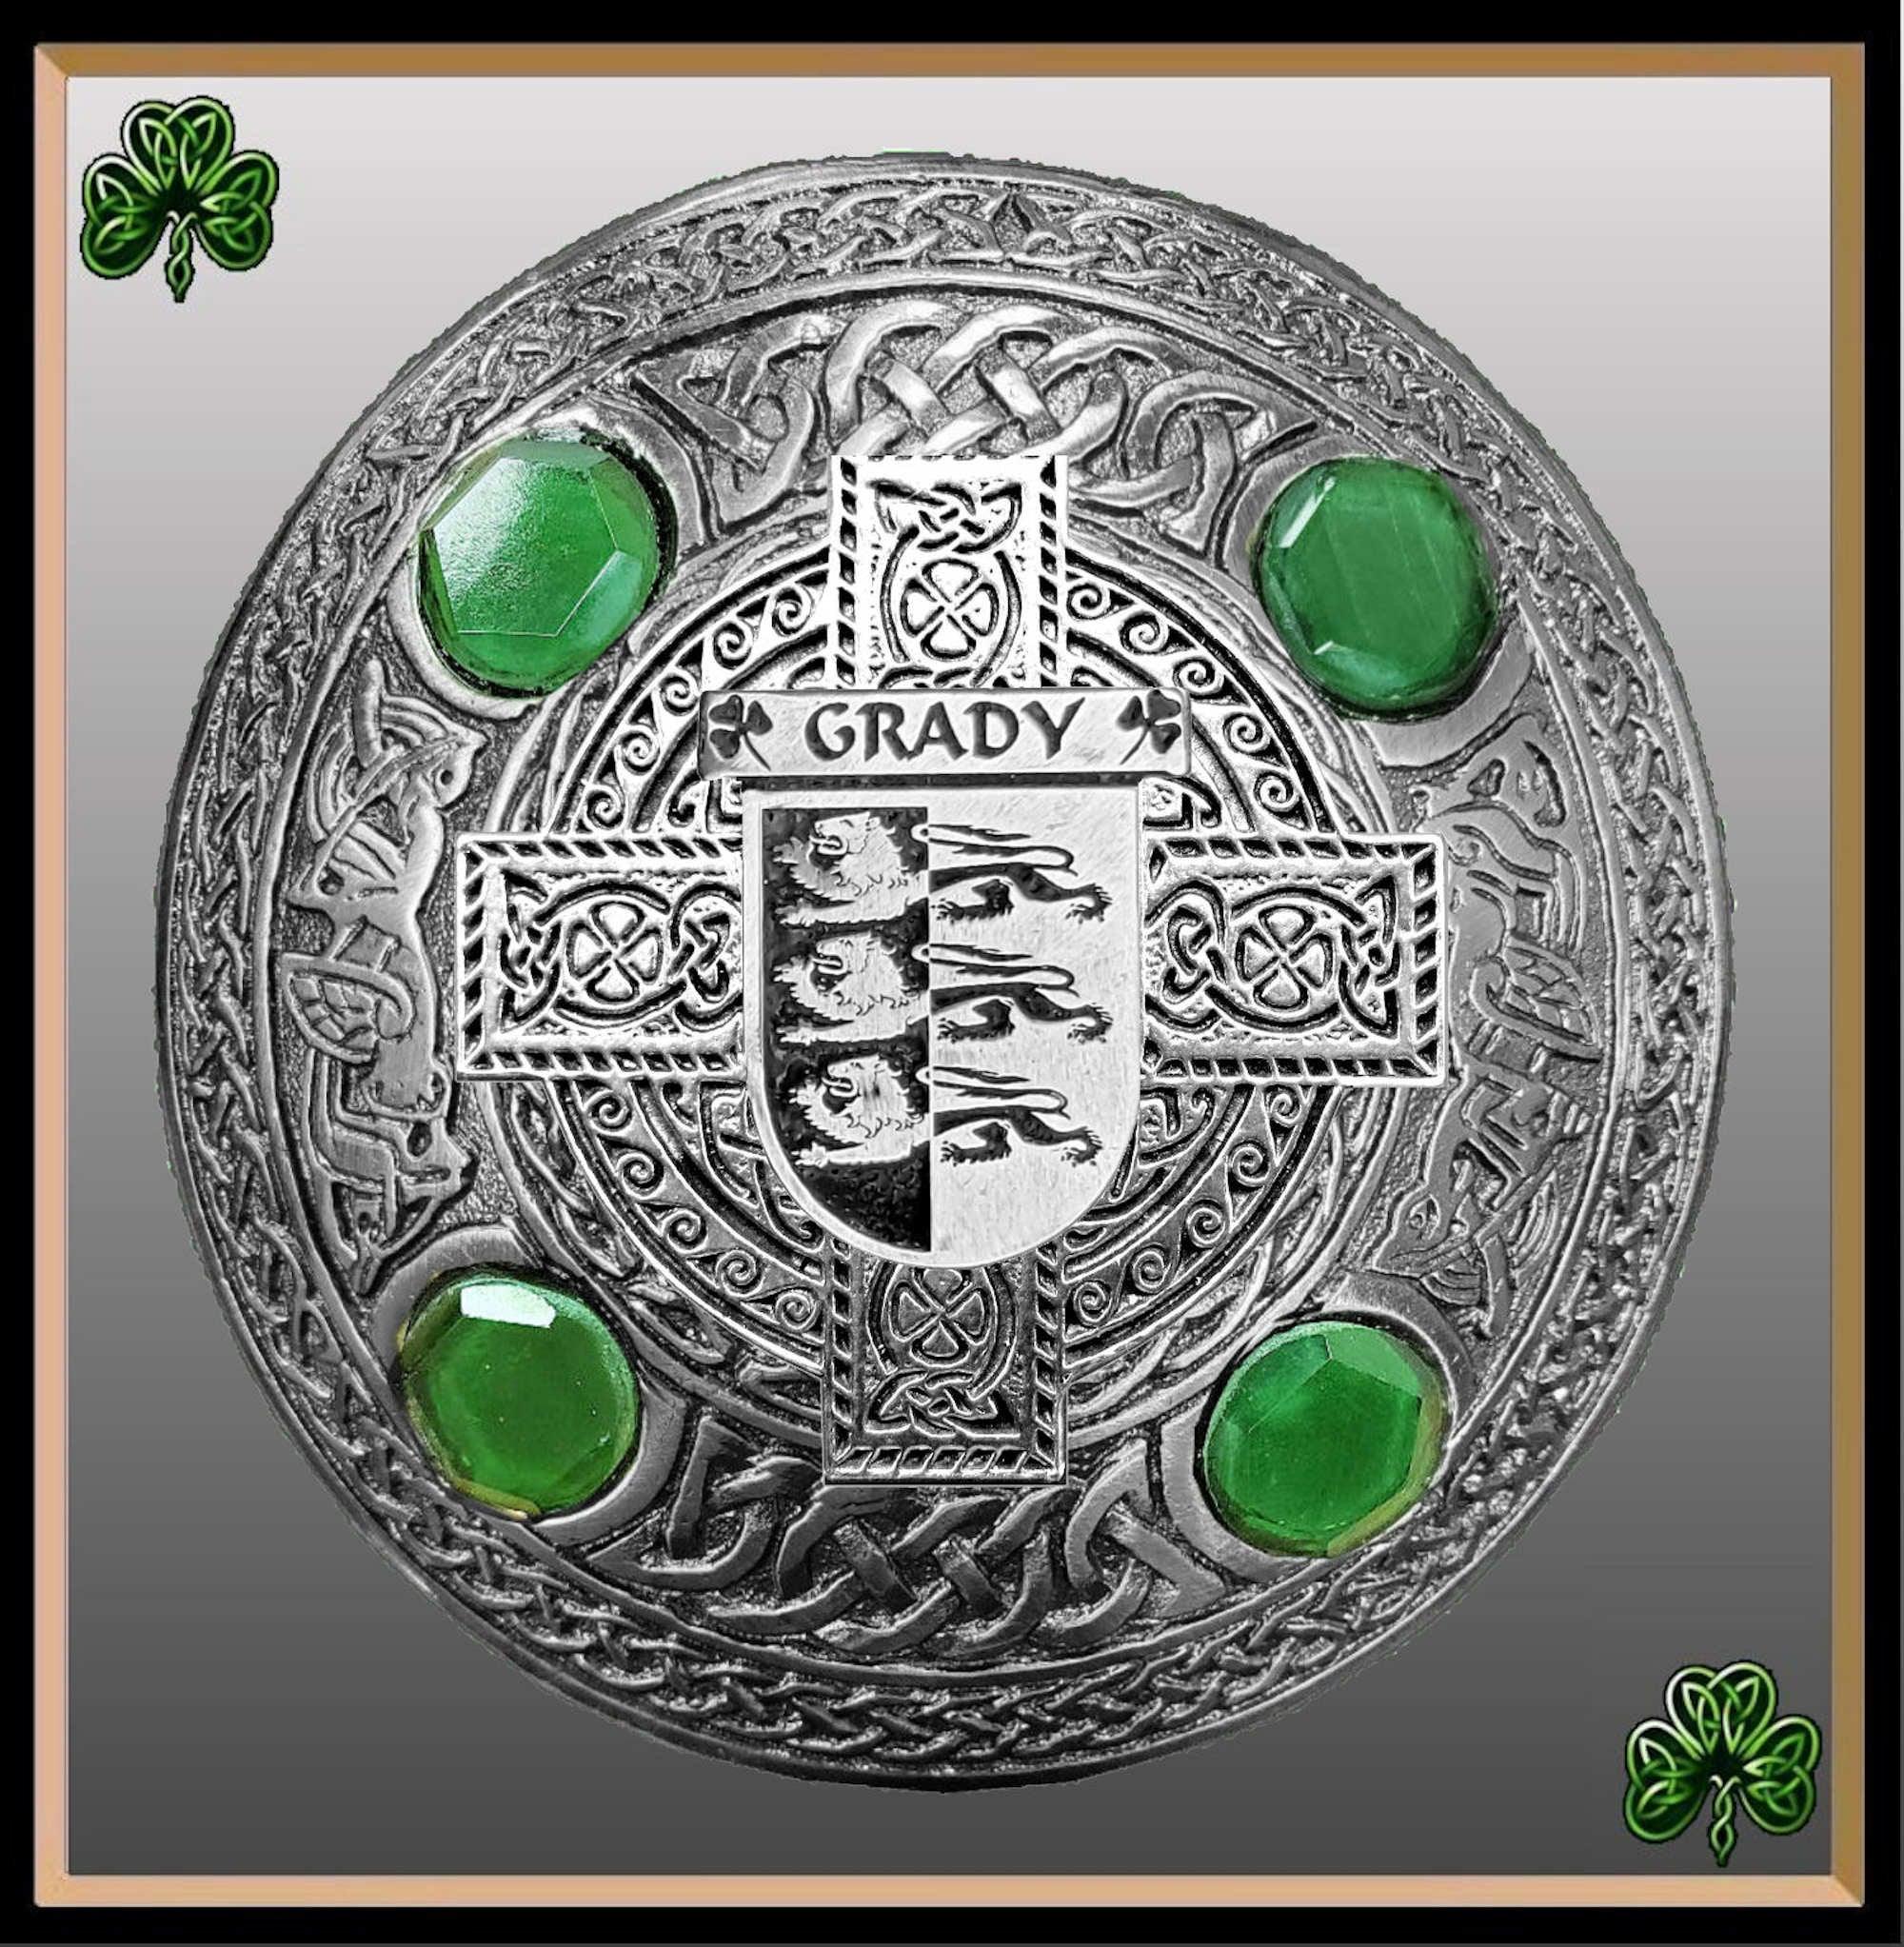 Grady Irish Coat of Arms Celtic Cross Plaid Brooch with Green Stones